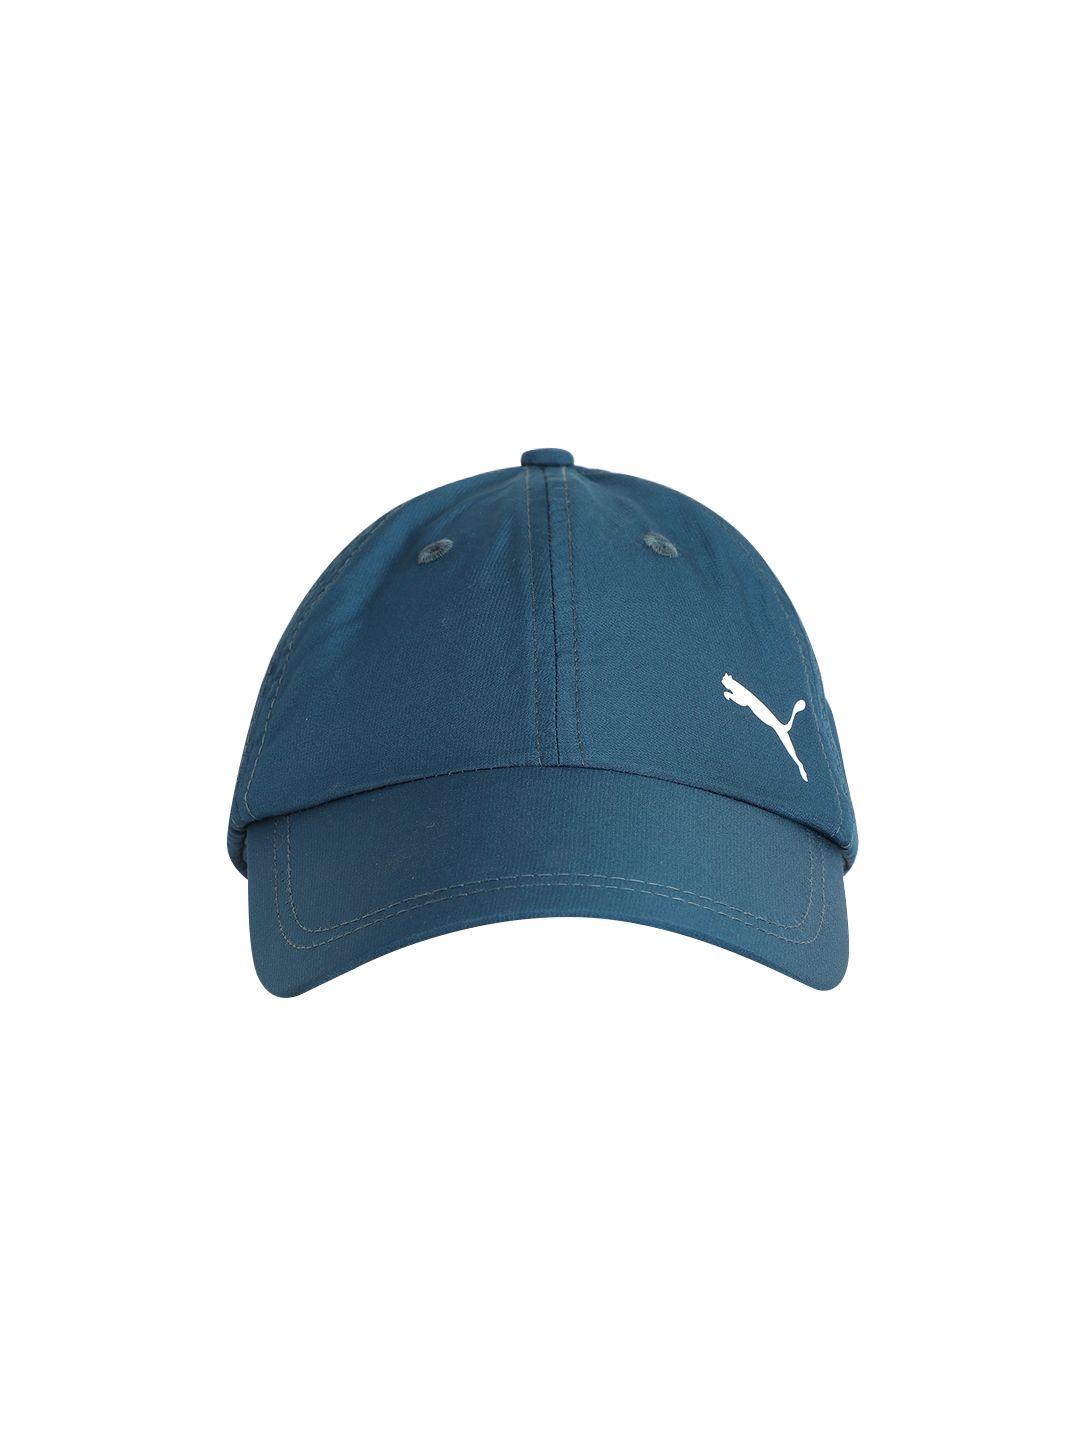 puma unisex teal blue brand logo detail tr core cap